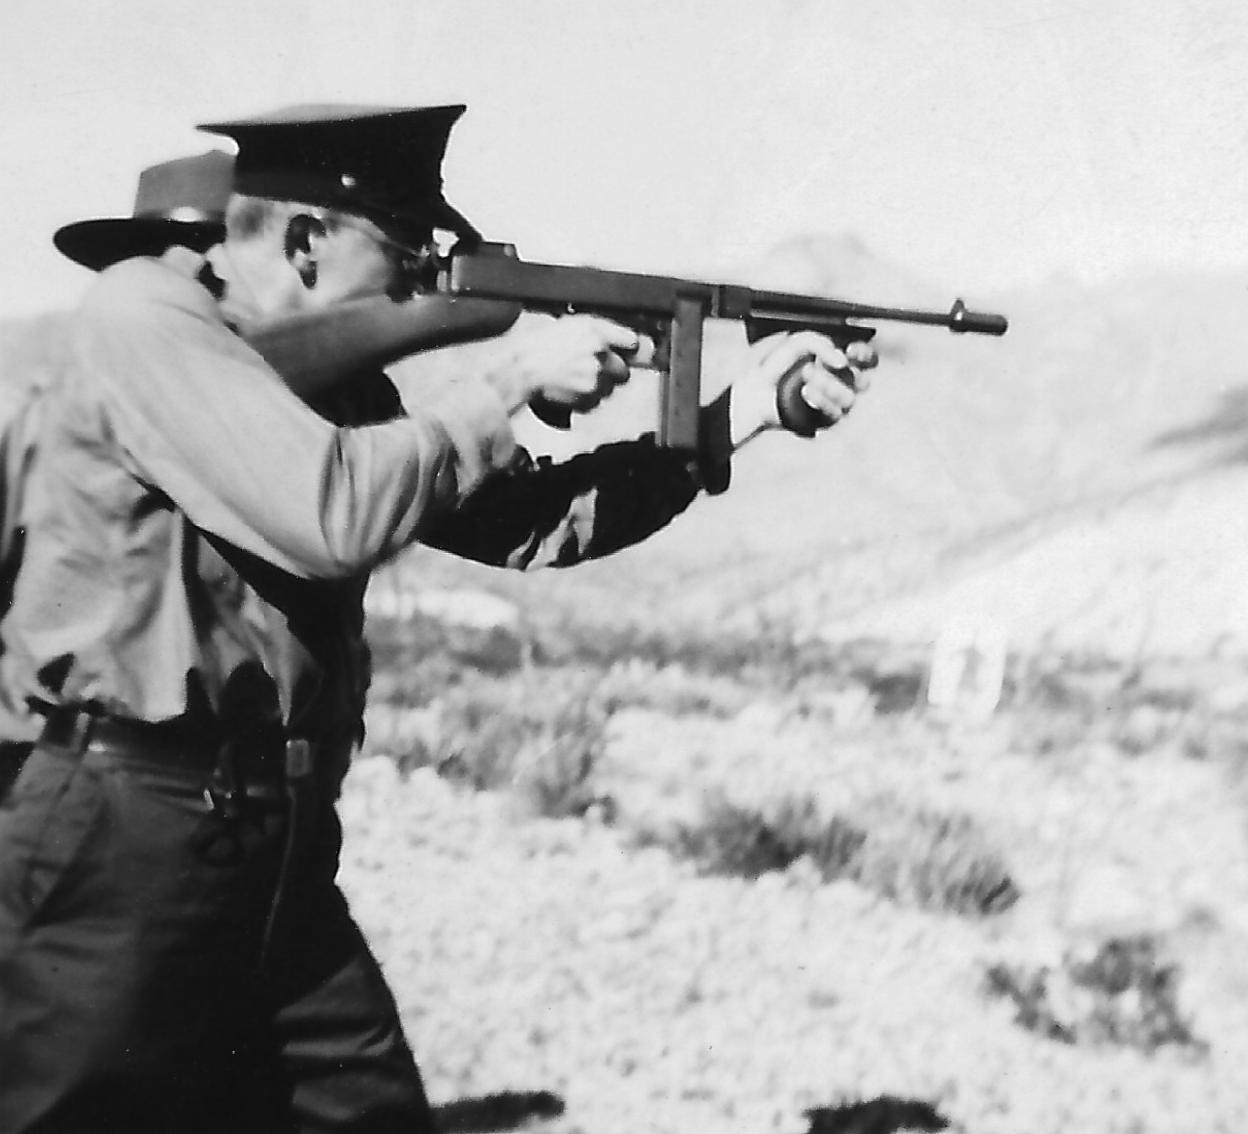 A US Border Patrol agent practice firing a gun near El Paso, Texas, 1940.